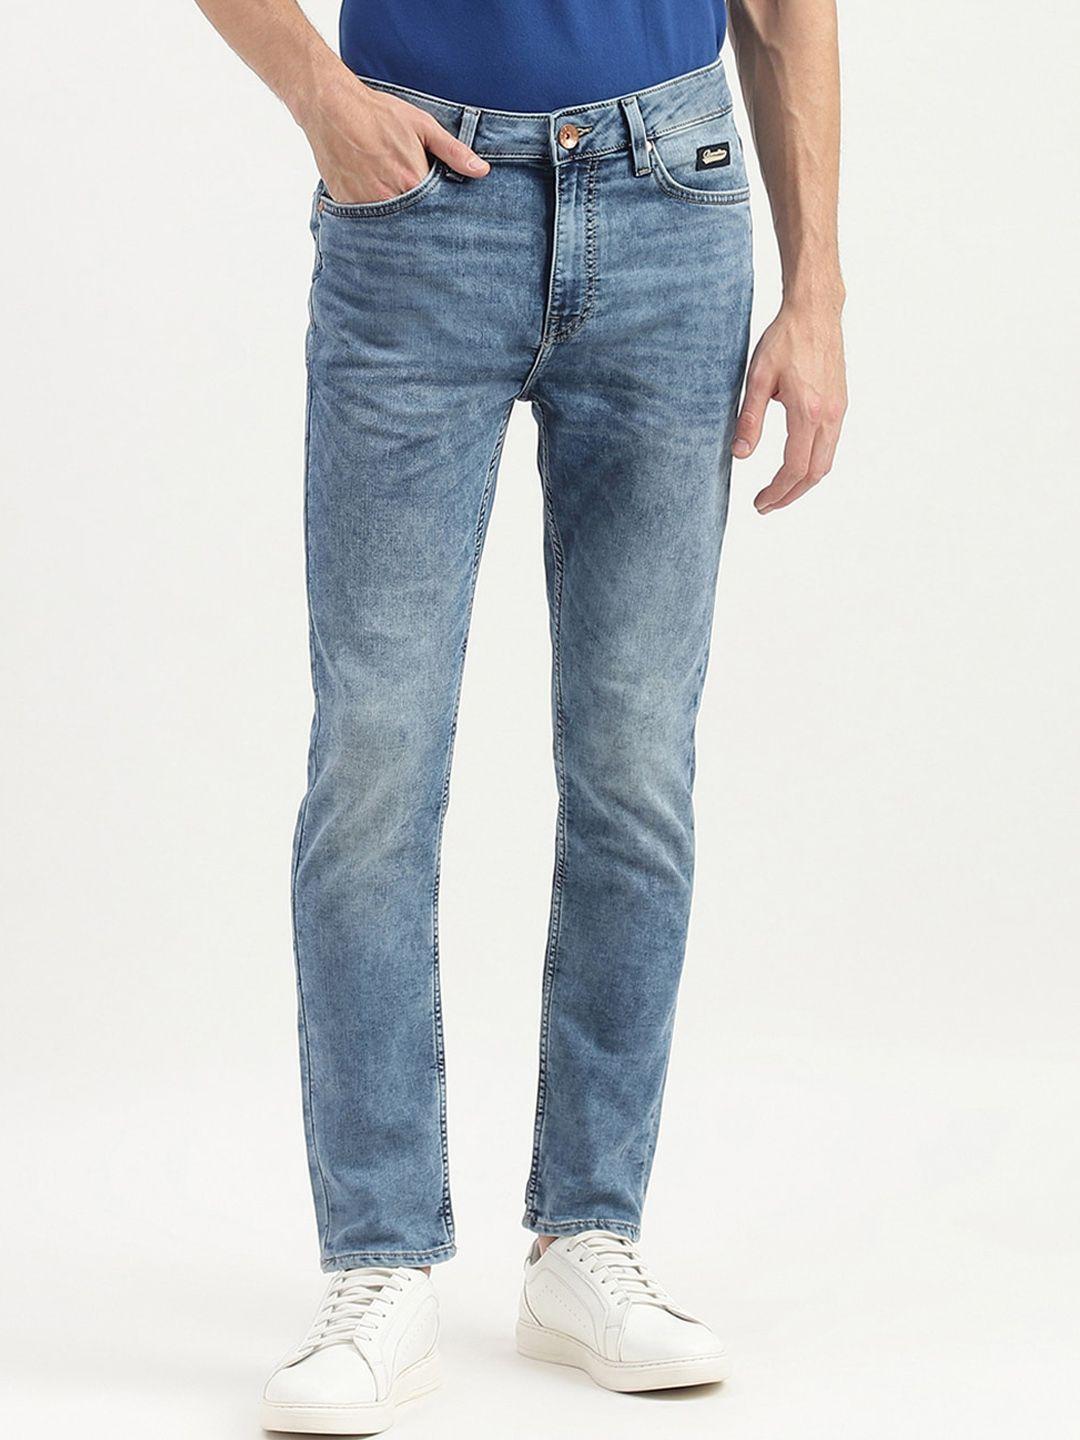 united-colors-of-benetton-men-clean-look-mid-rise-cotton-jeans